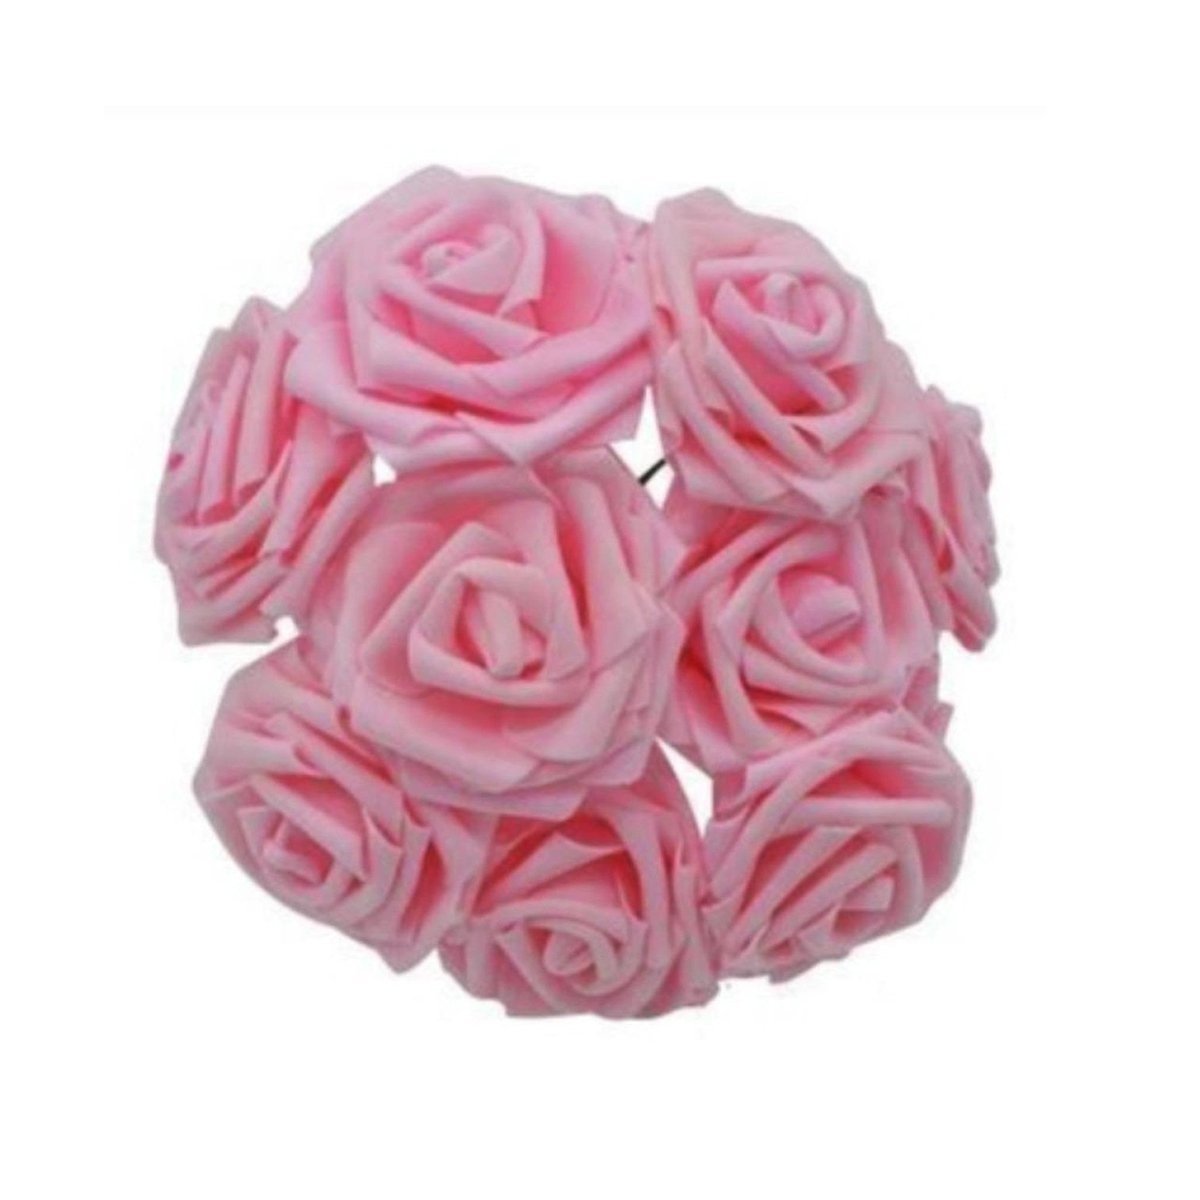 20x Pink 2 7cm Foam Flowers Rose Stems Artificial Wedding Bride Bouquet - Asia Sell